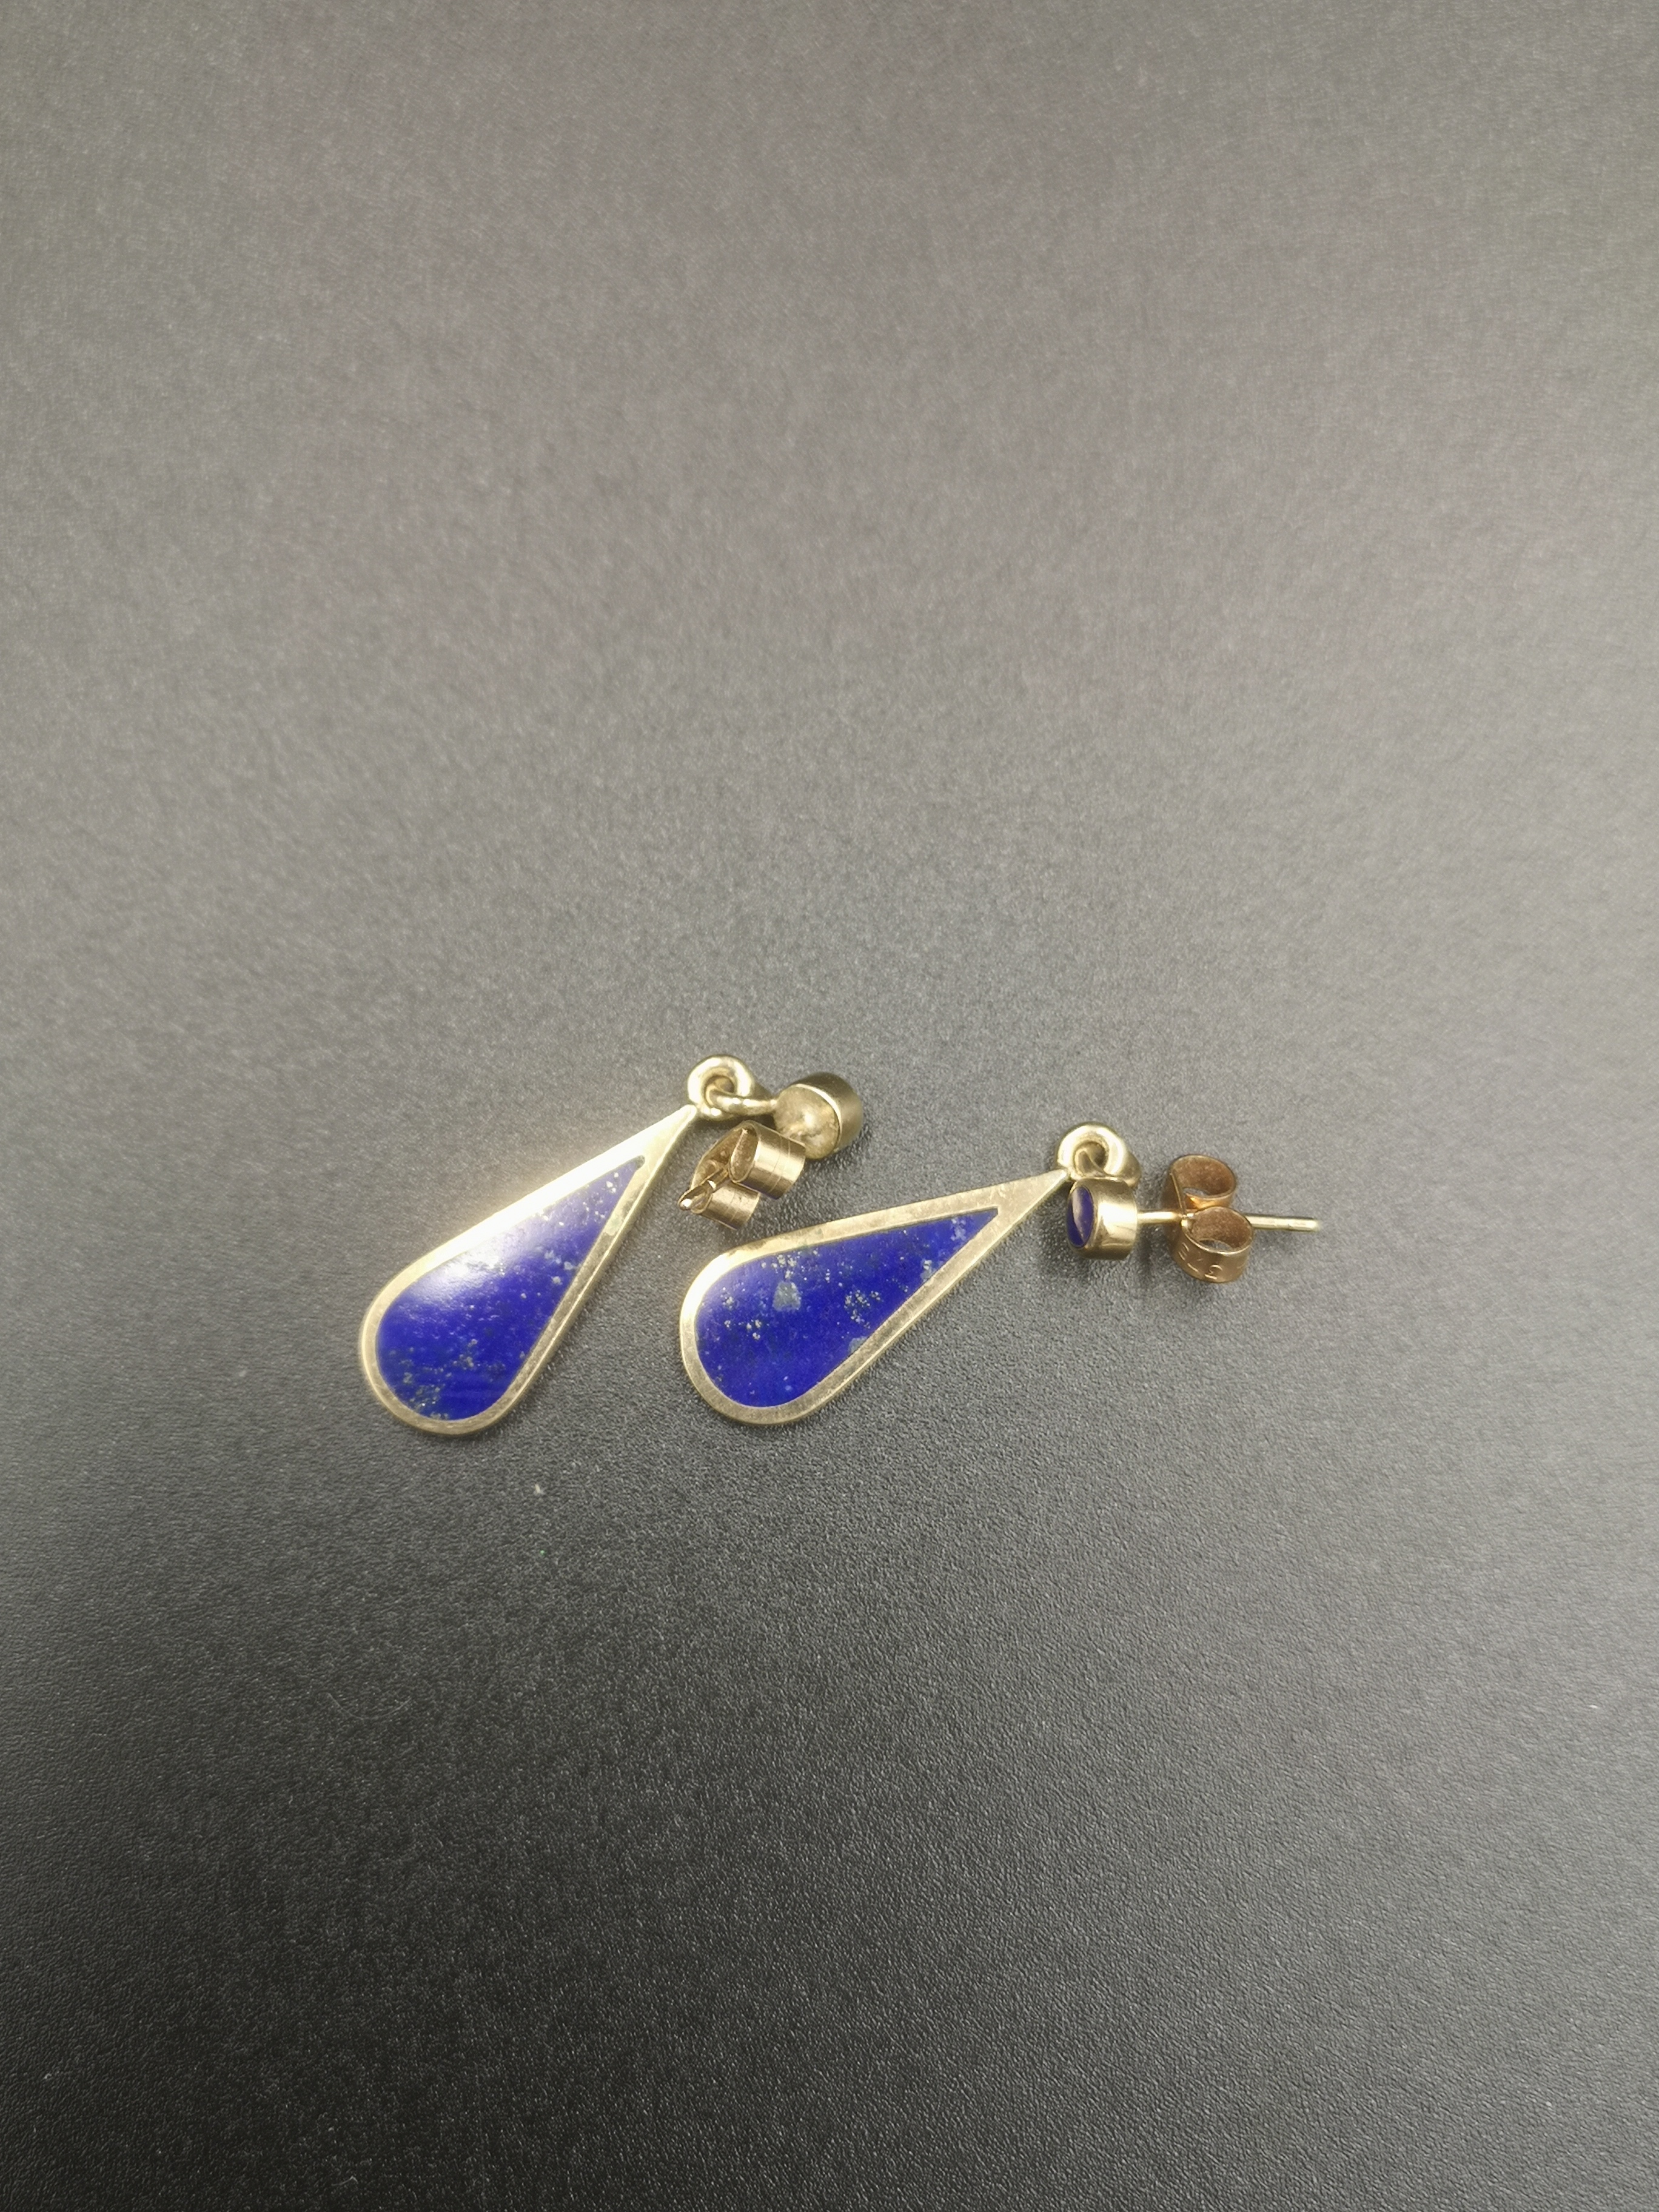 pair of 9ct gold drop earrings - Image 3 of 5